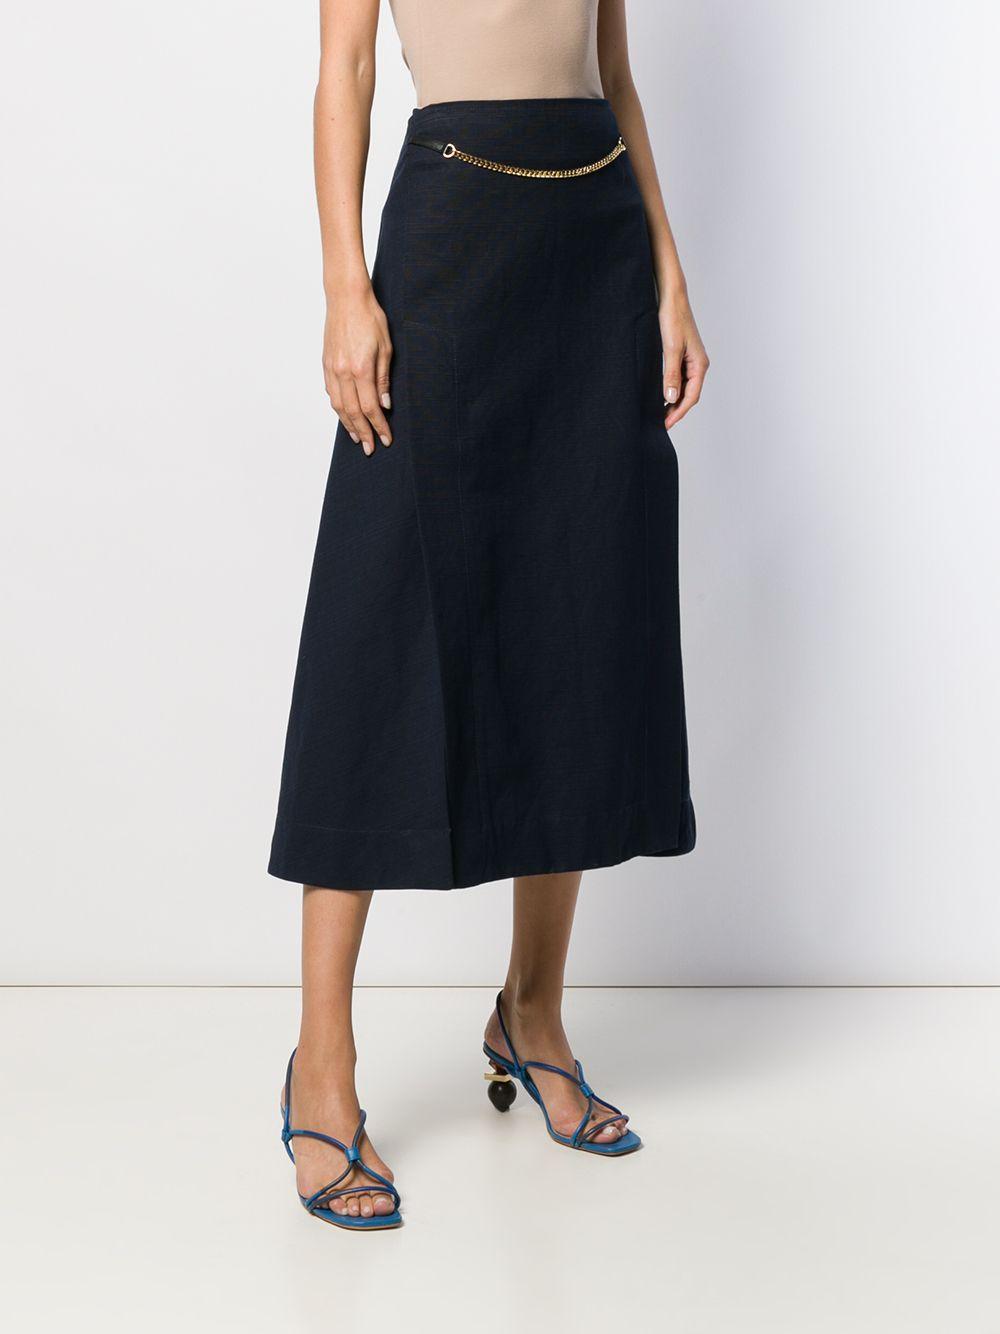 Victoria Beckham Chain Detail A-line Skirt in Blue - Lyst